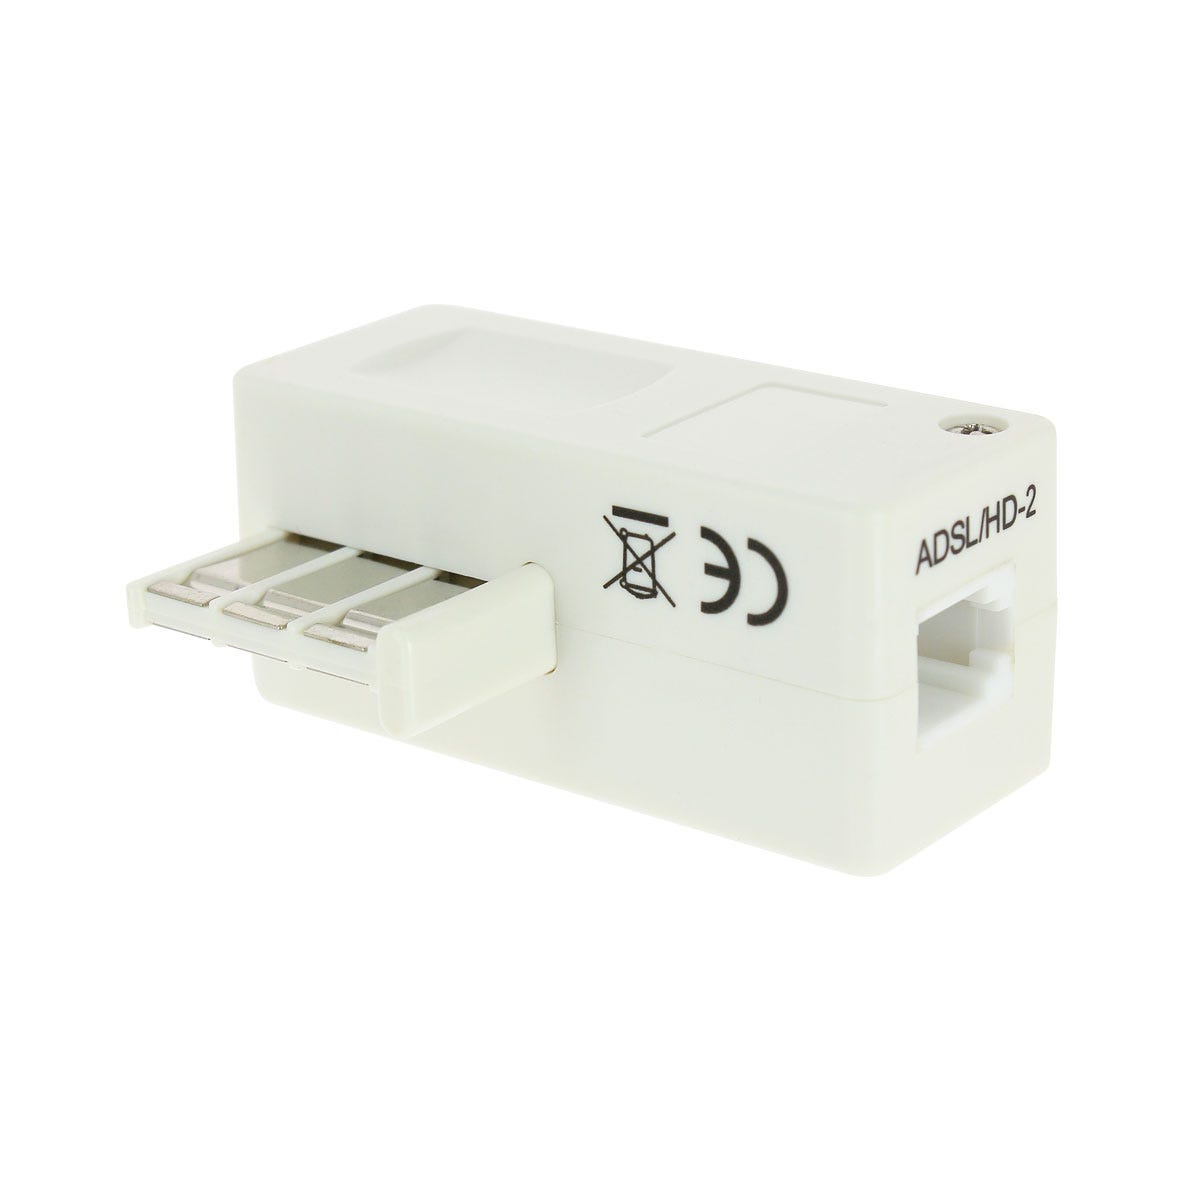 Filtre ADSL - Prise Gigogne / Connecteur RJ11 Femelle (Blanc) - Label Emmaüs